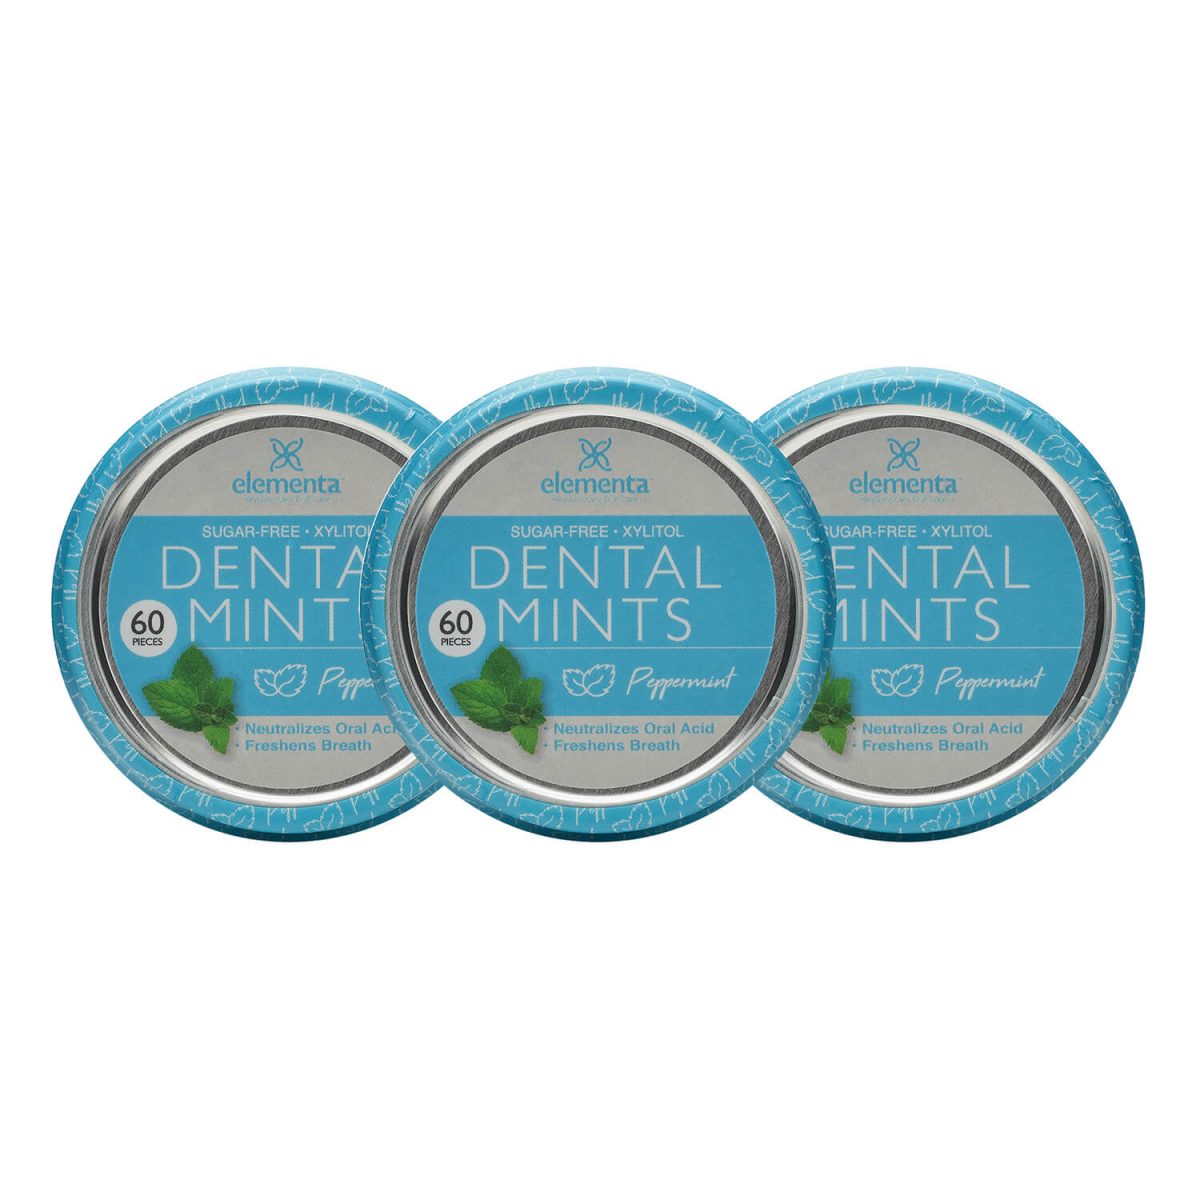 nano silver dental mints peppermint 3 pack